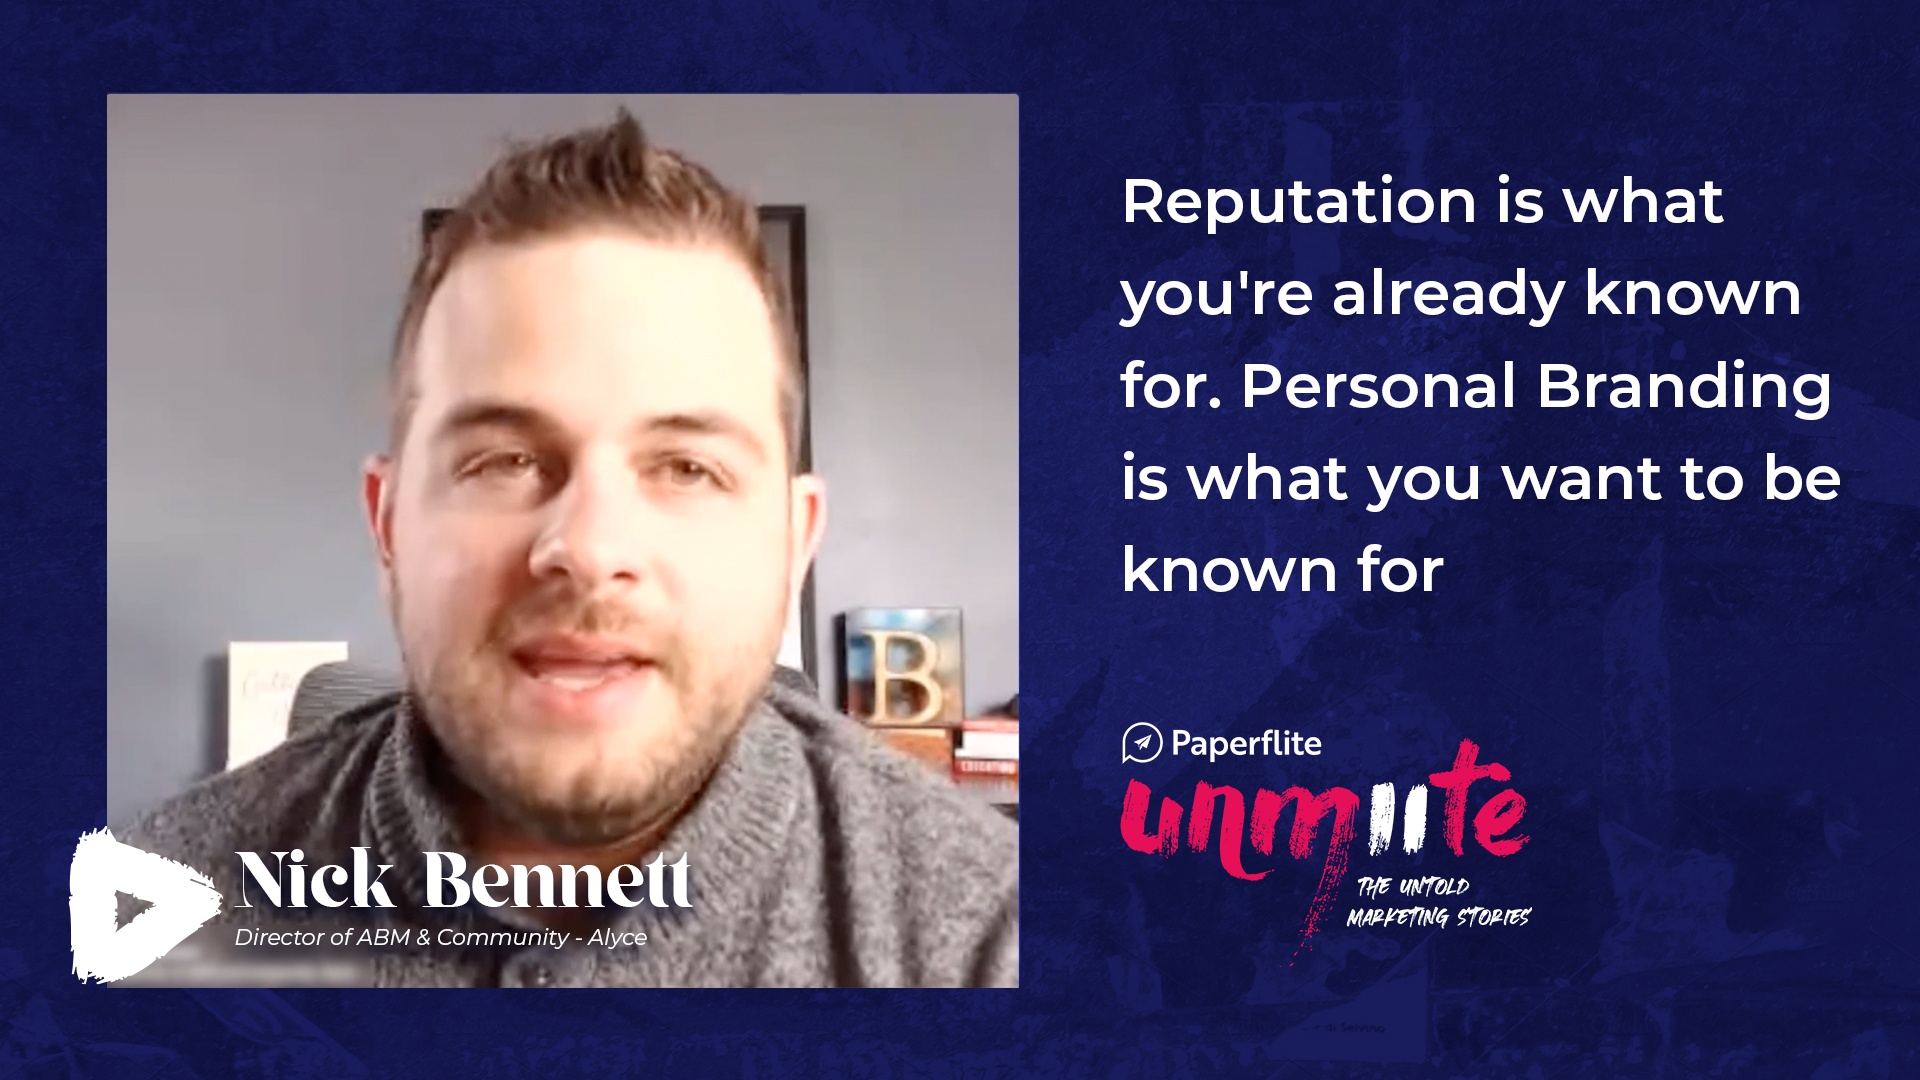 Nick Bennett on personal branding at Paperflite UNMUTE 2021 - reputation vs personal branding